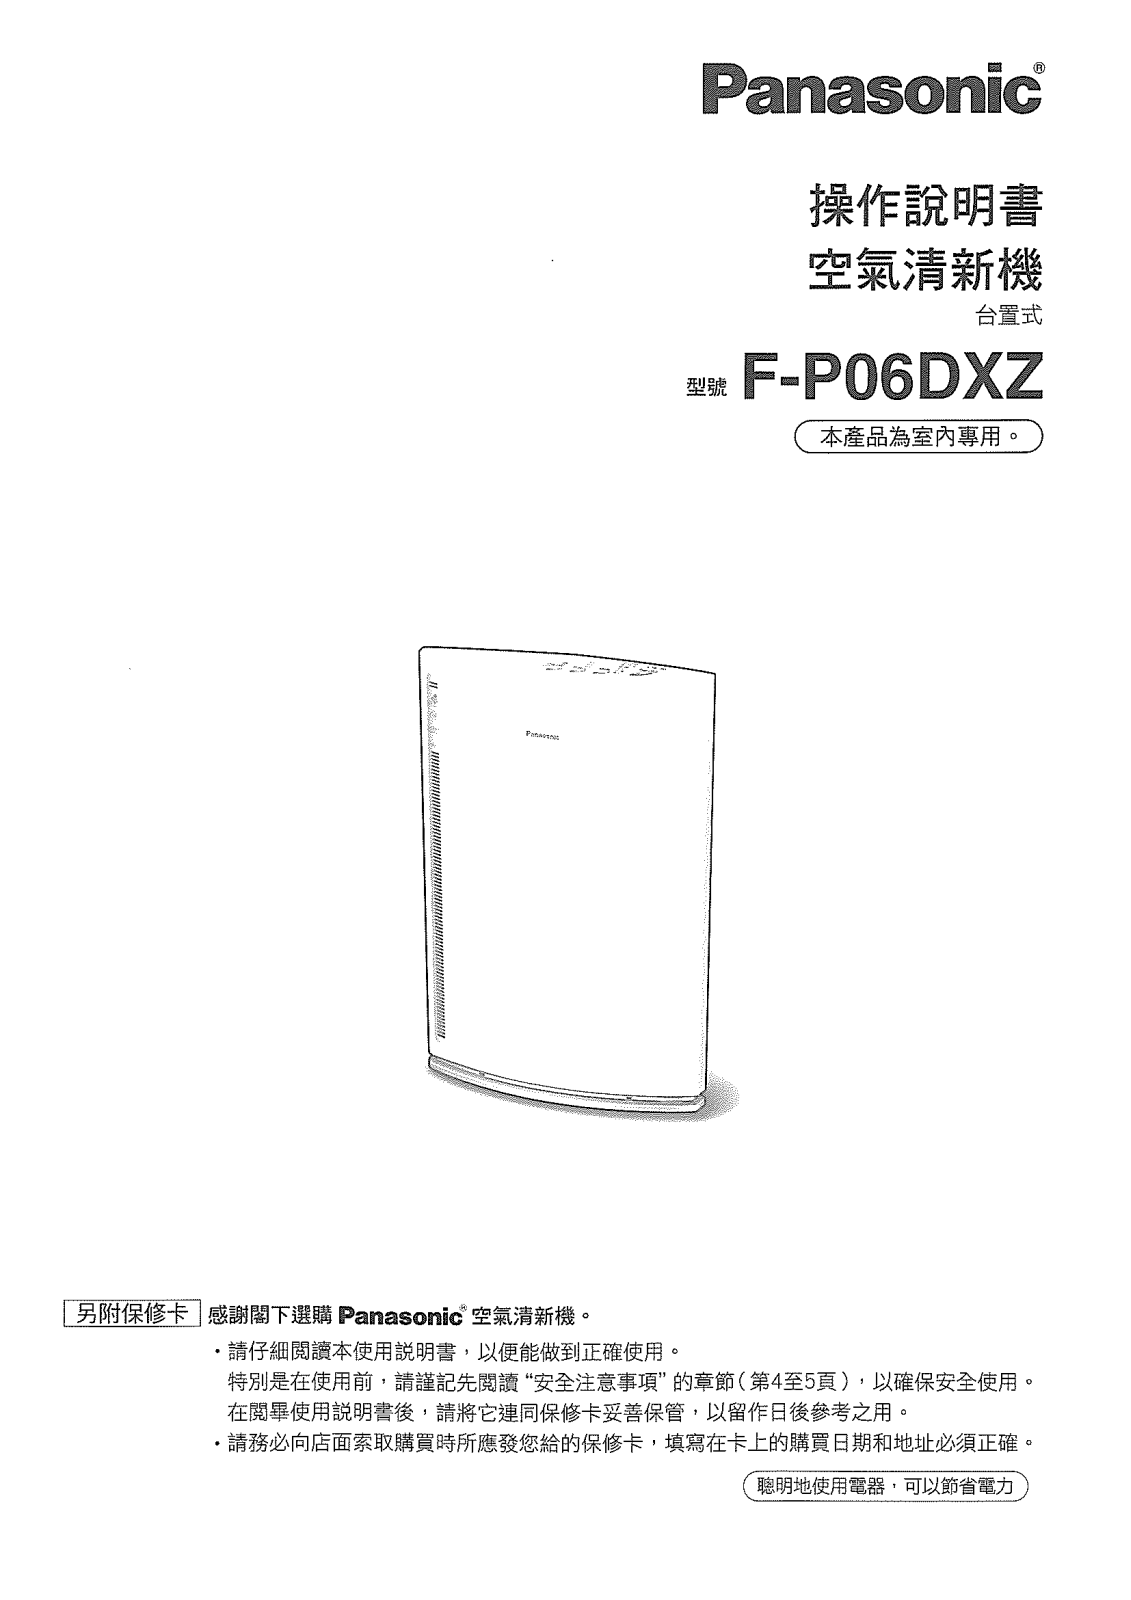 Panasonic F-P06DXZ operating Manual